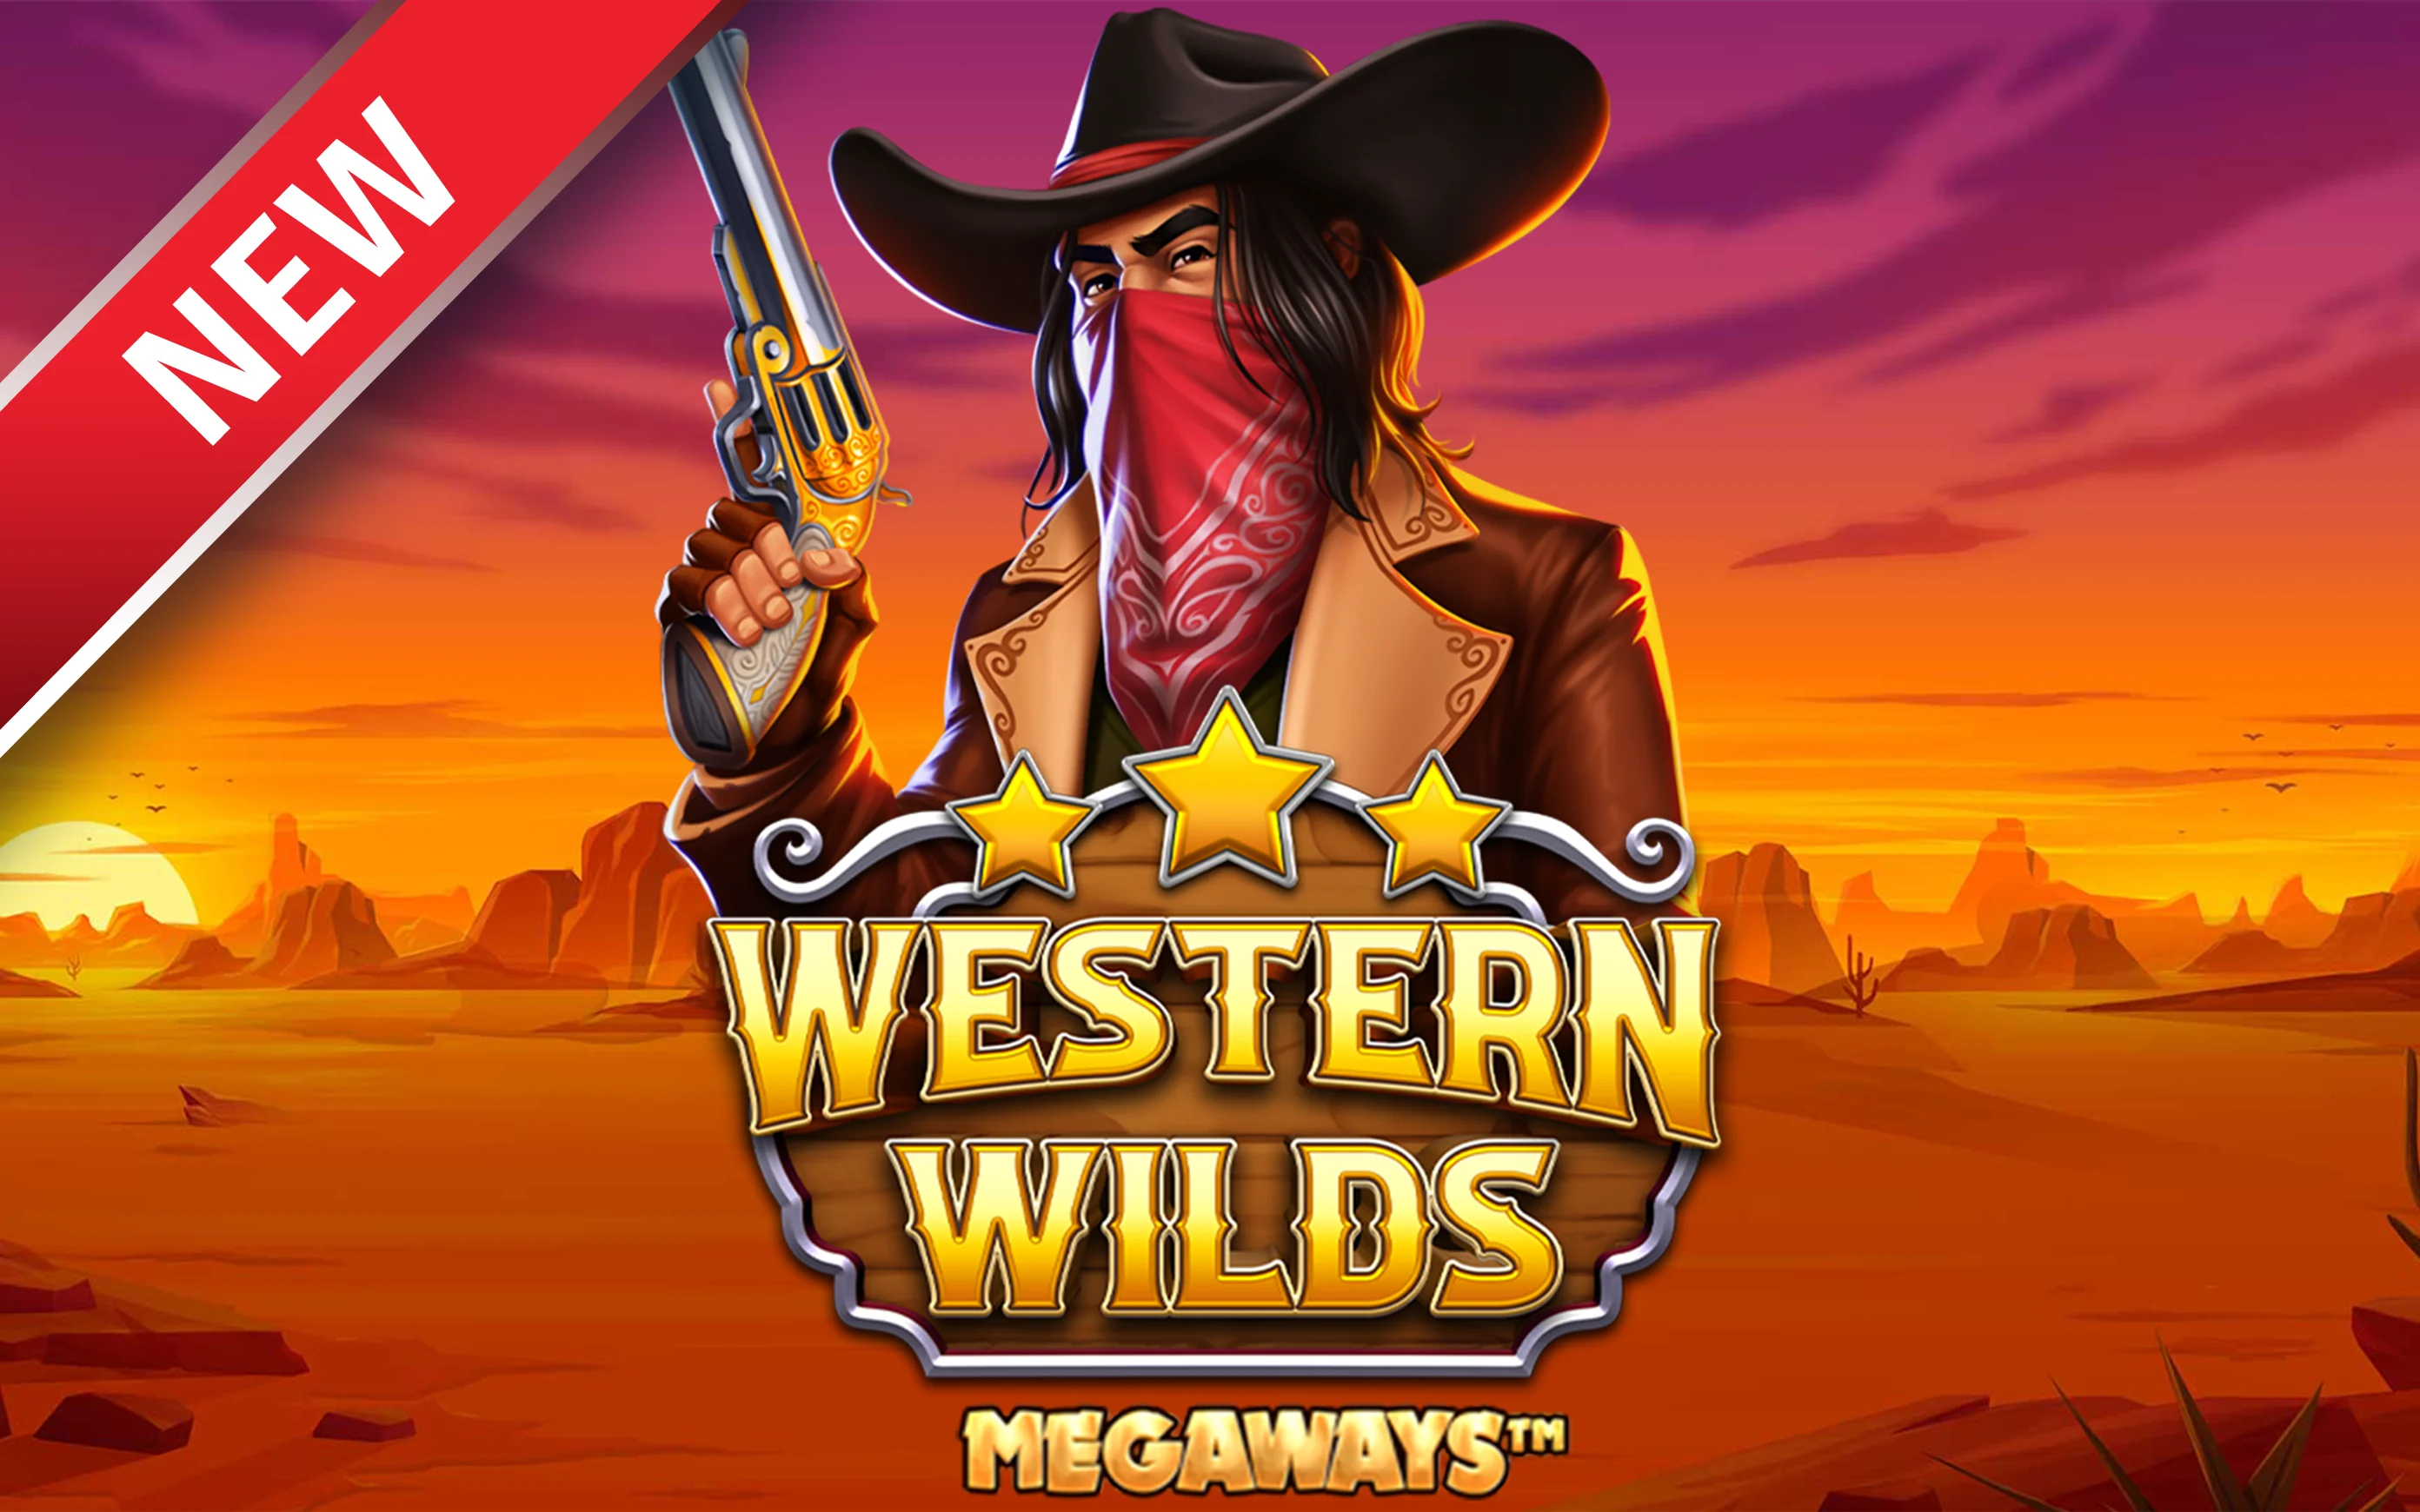 Joacă Western Wilds Megaways în cazinoul online Starcasino.be